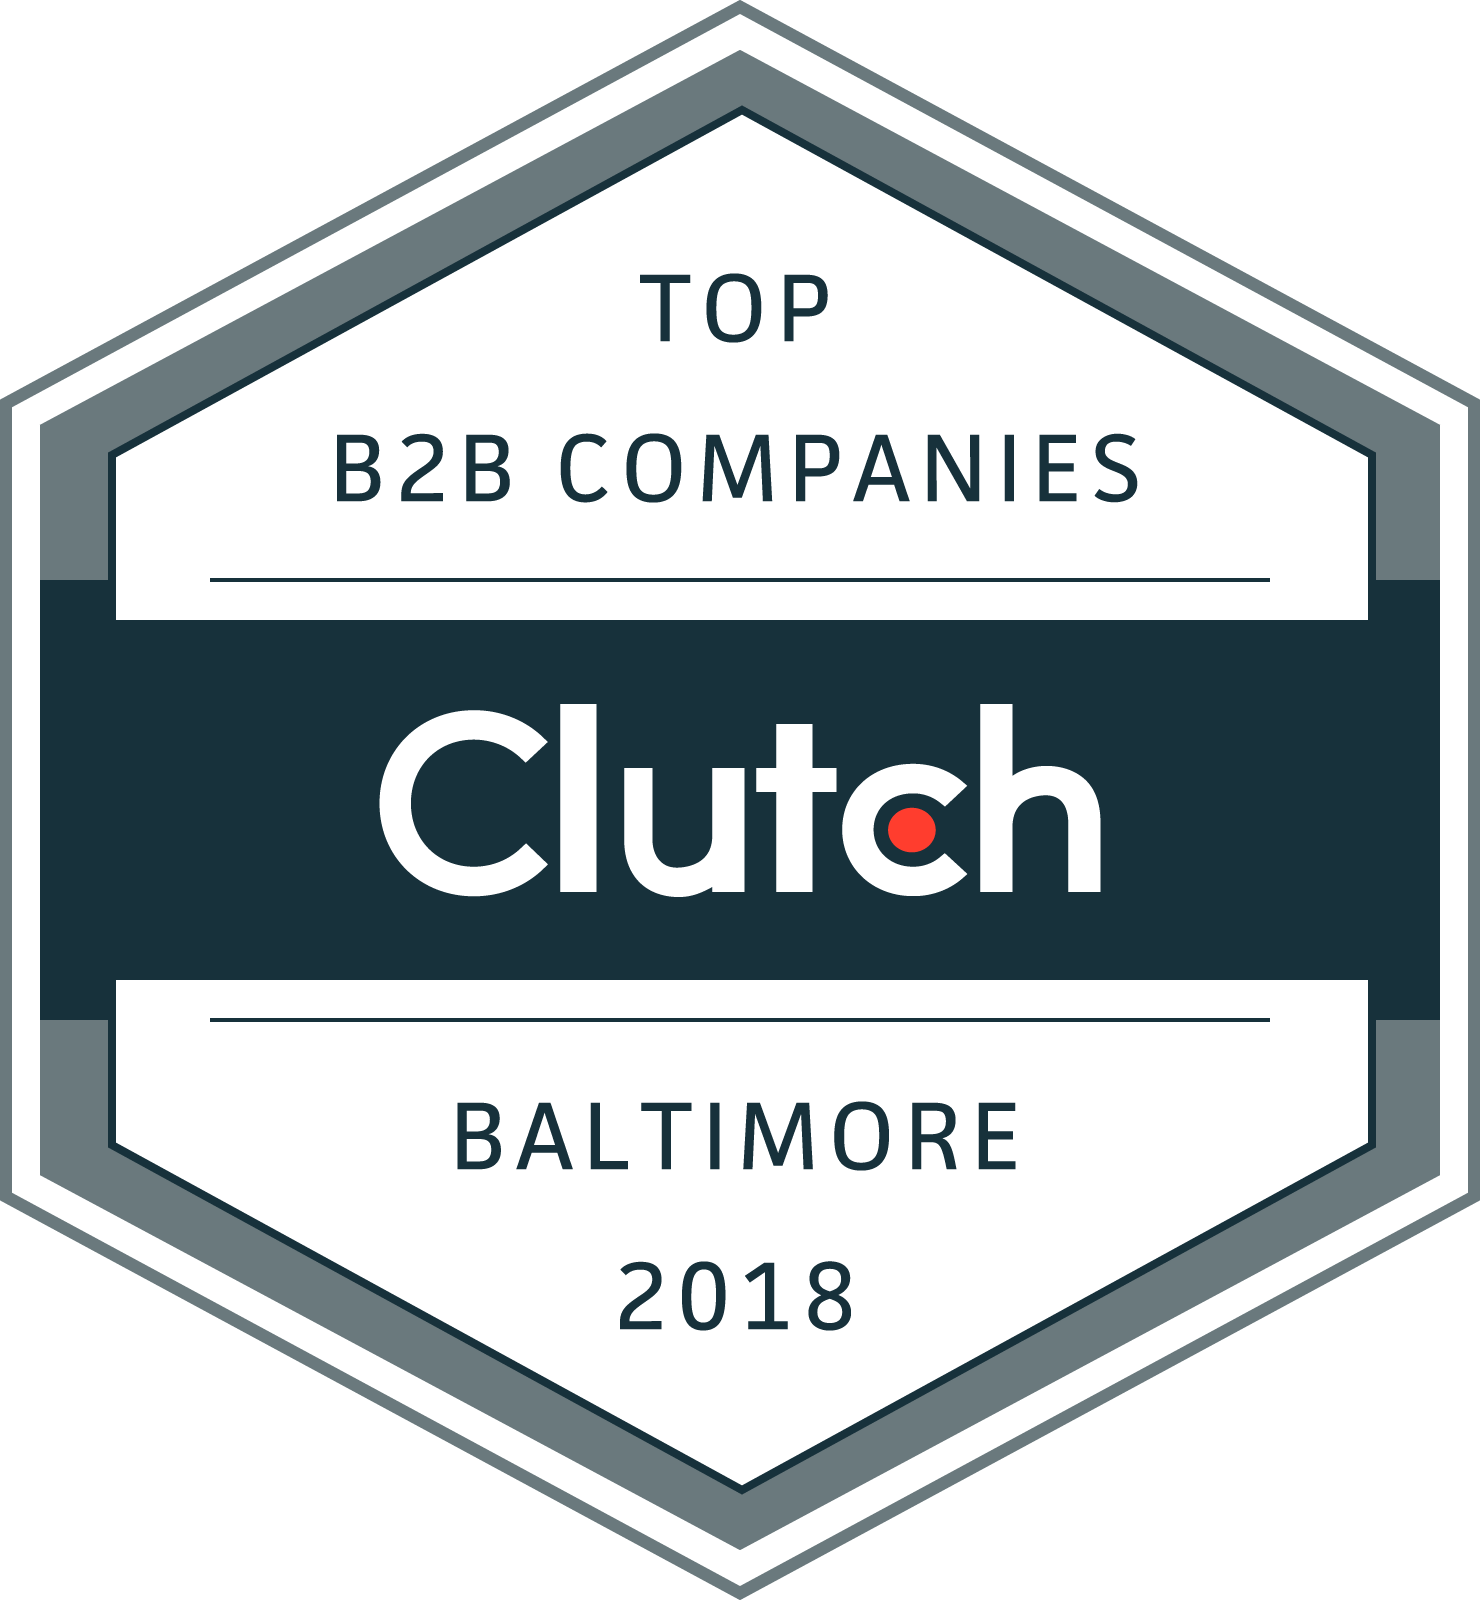 Clutch Top B2B Companies Baltimore 2018